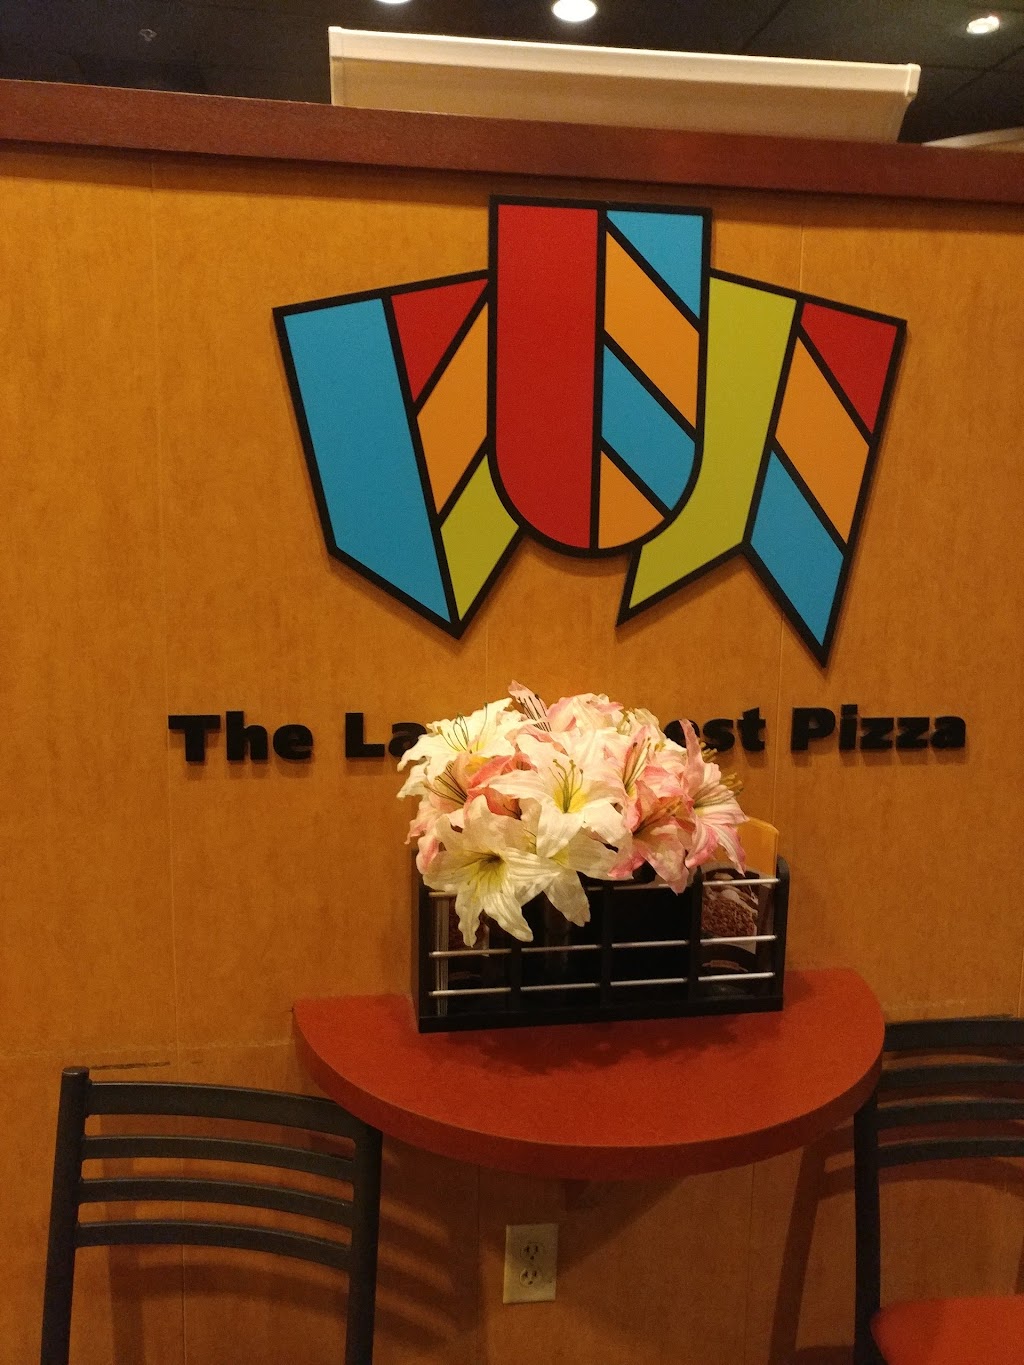 Round Table Pizza | 2105 Town Center Plaza F-180, West Sacramento, CA 95691, USA | Phone: (916) 374-8595